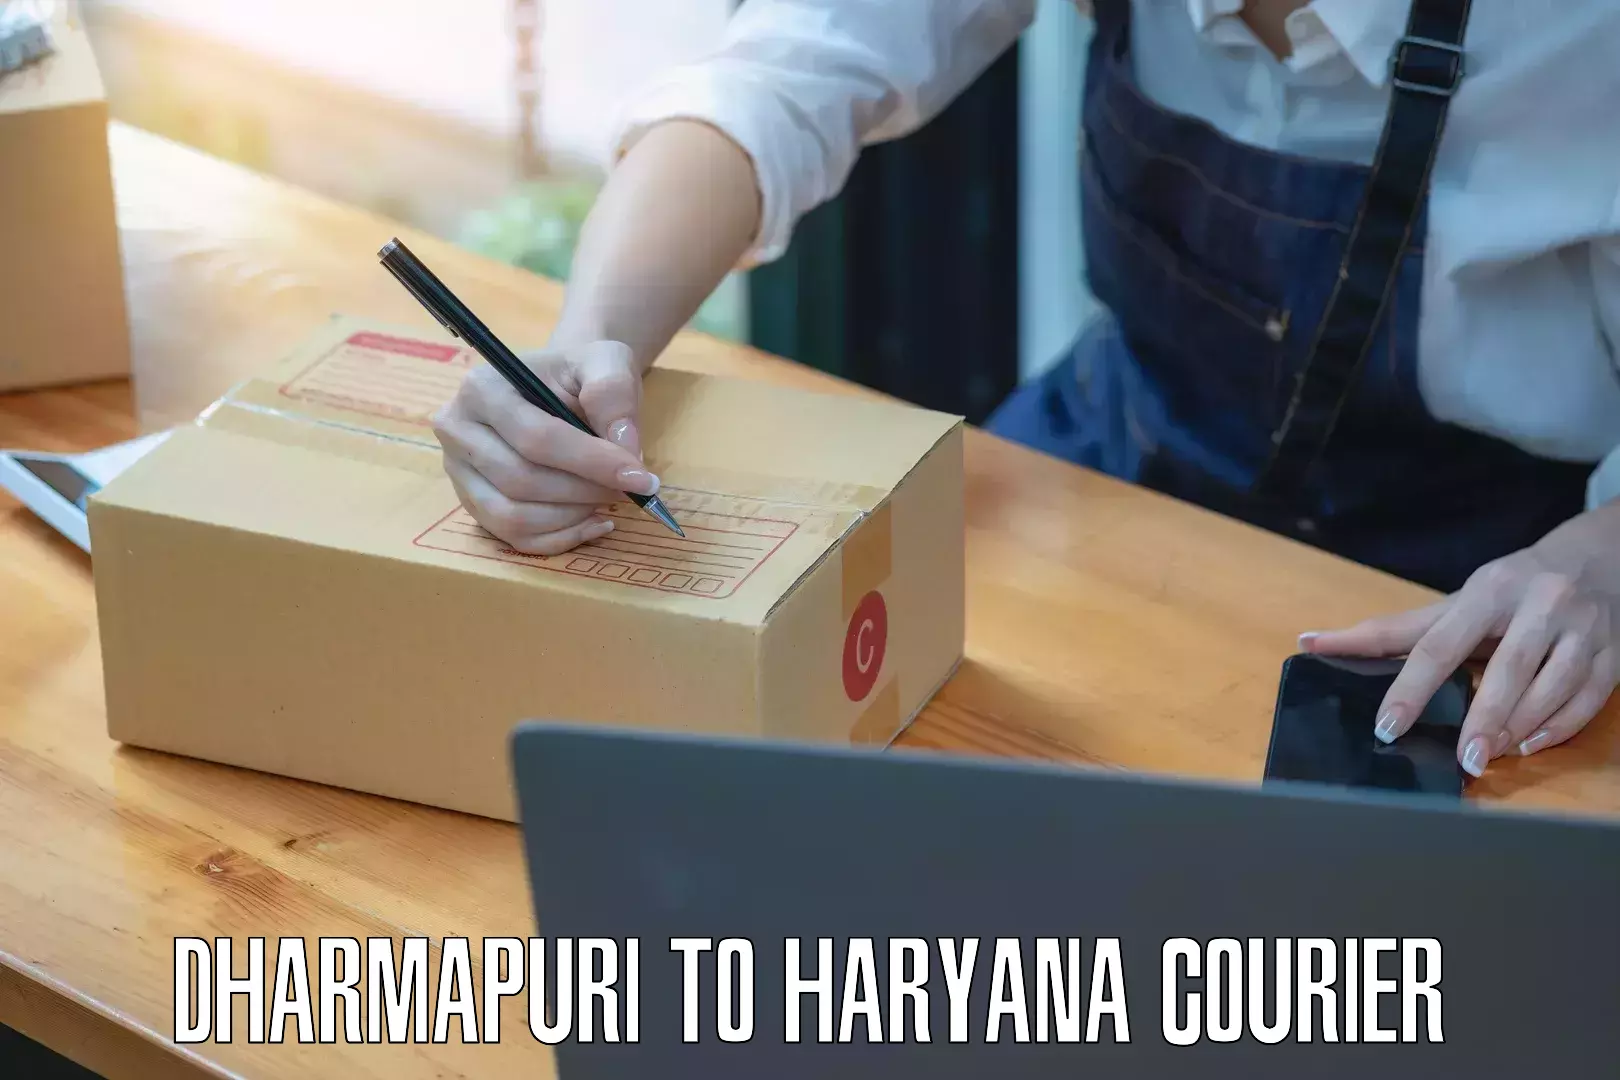 Courier service partnerships Dharmapuri to Narwana